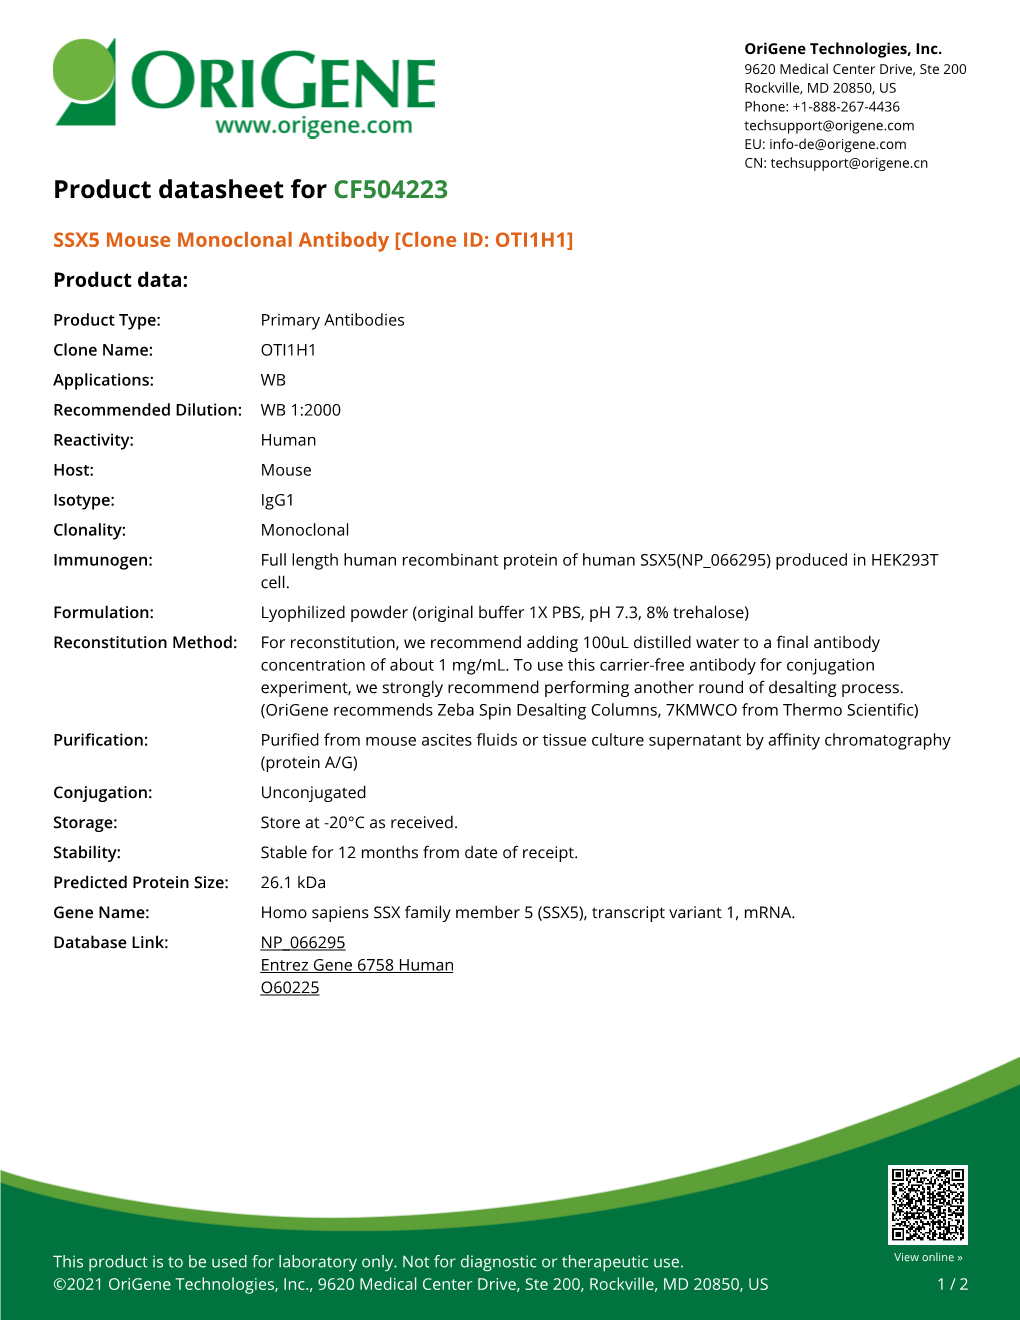 SSX5 Mouse Monoclonal Antibody [Clone ID: OTI1H1] Product Data